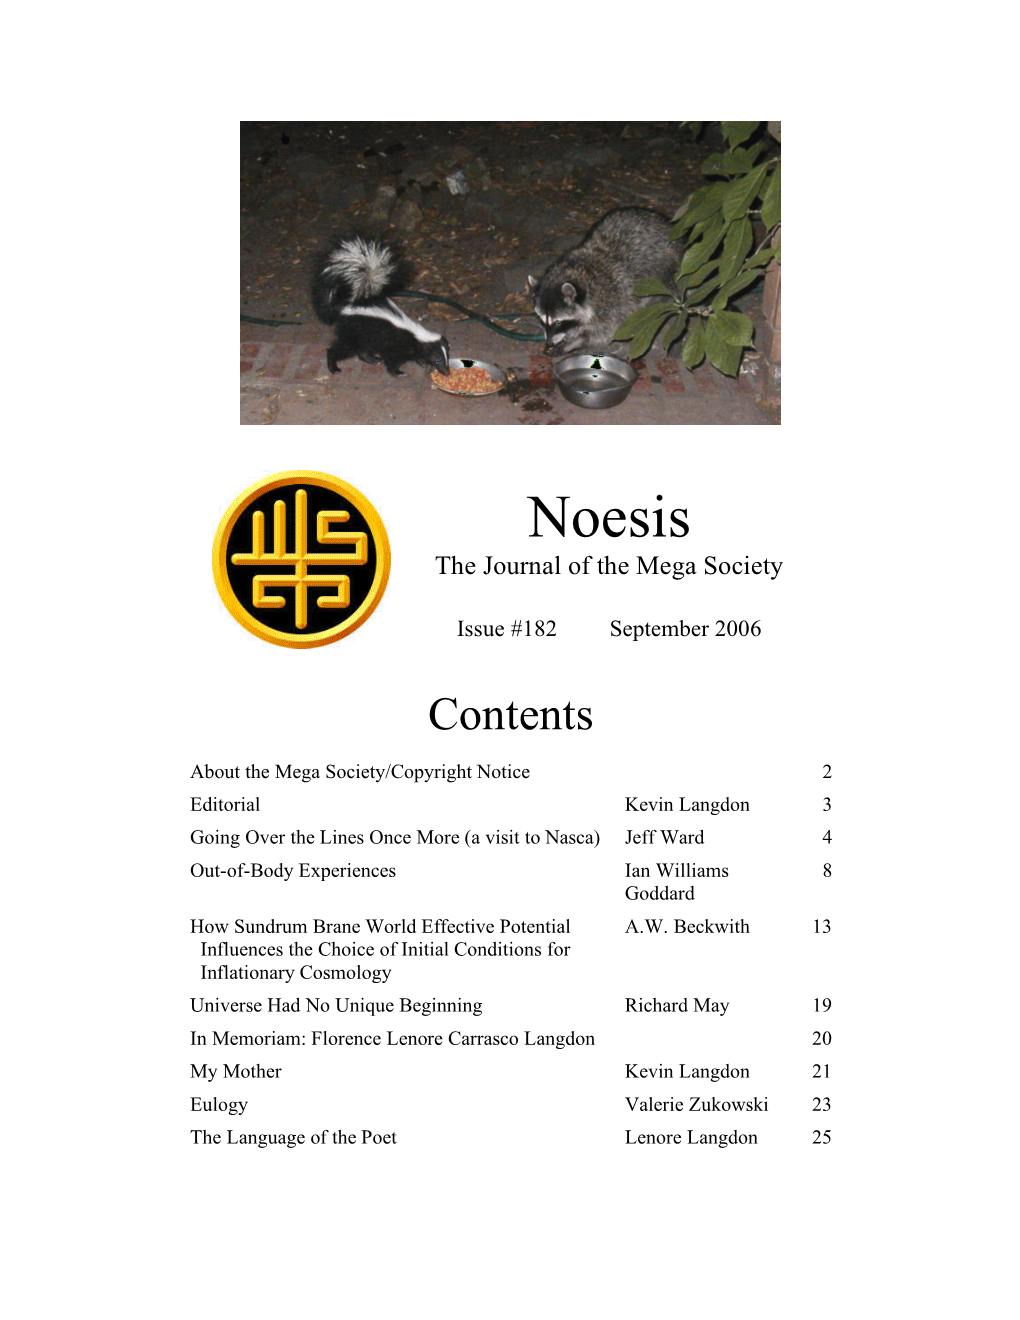 Noesis the Journal of the Mega Society